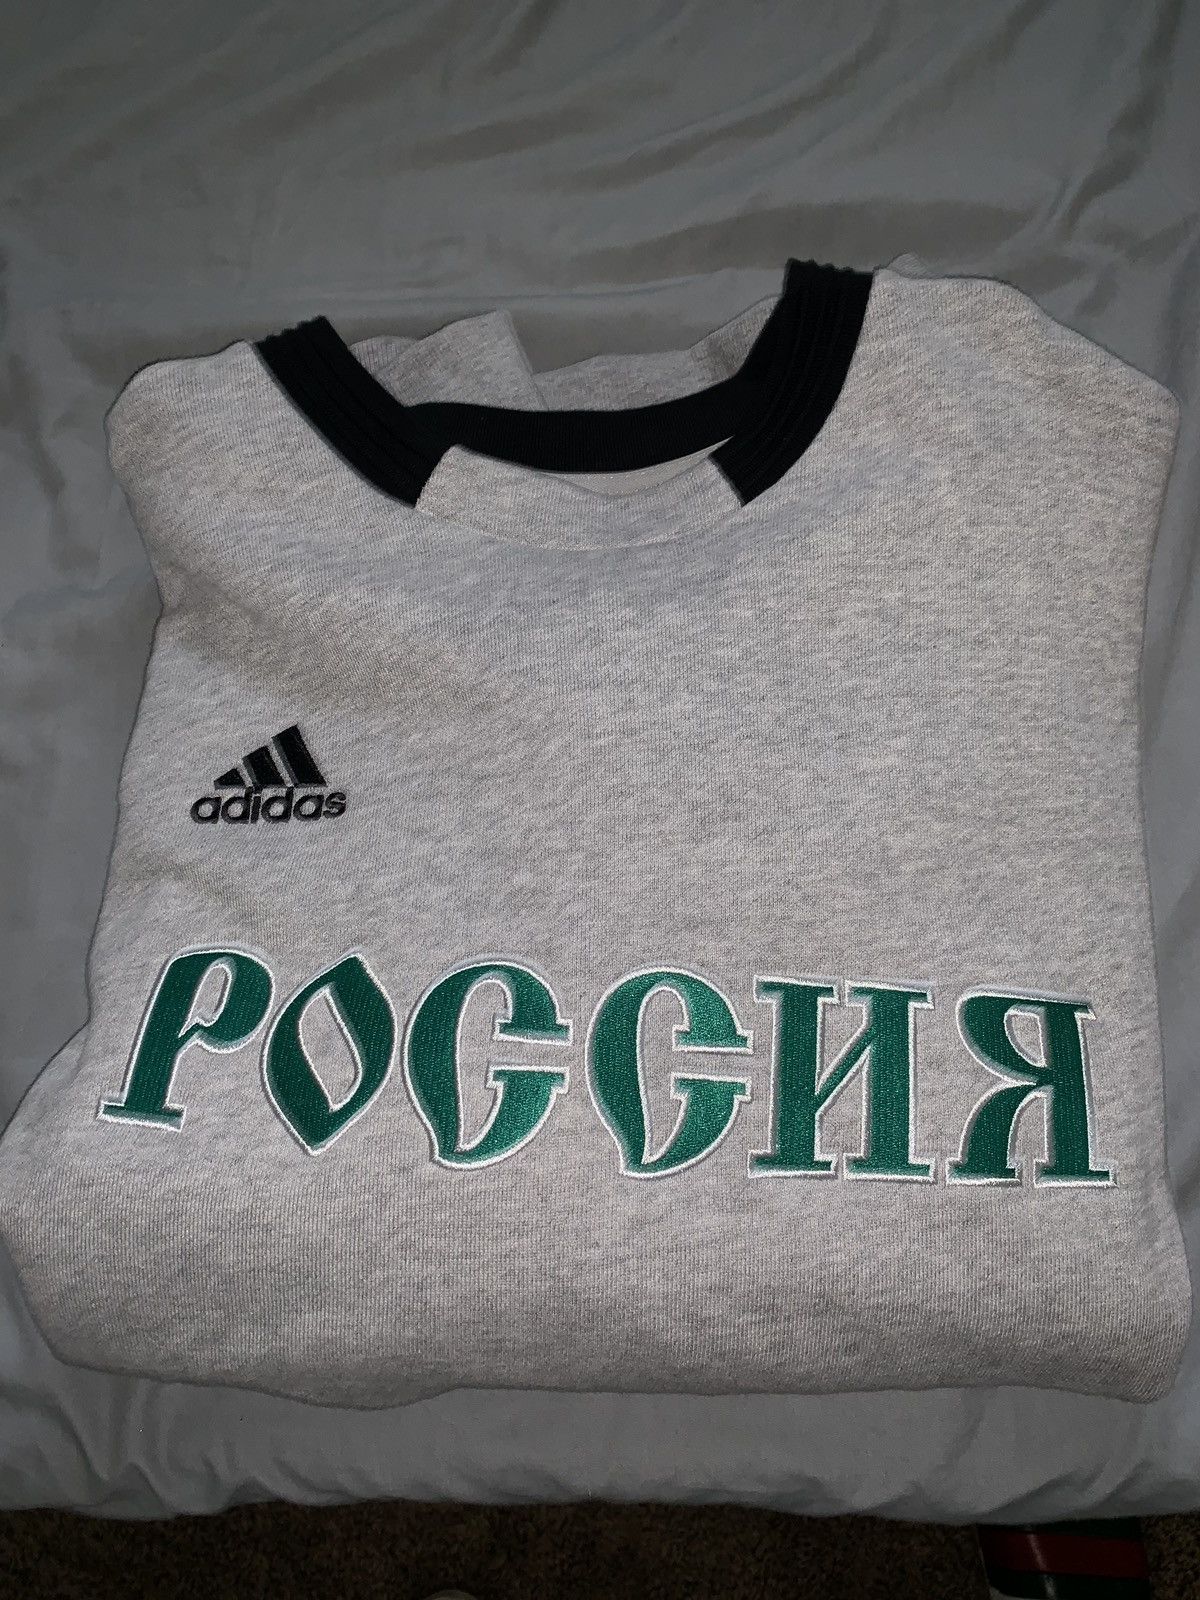 Adidas Russia Sweatshirt Size US L / EU 52-54 / 3 - 2 Preview